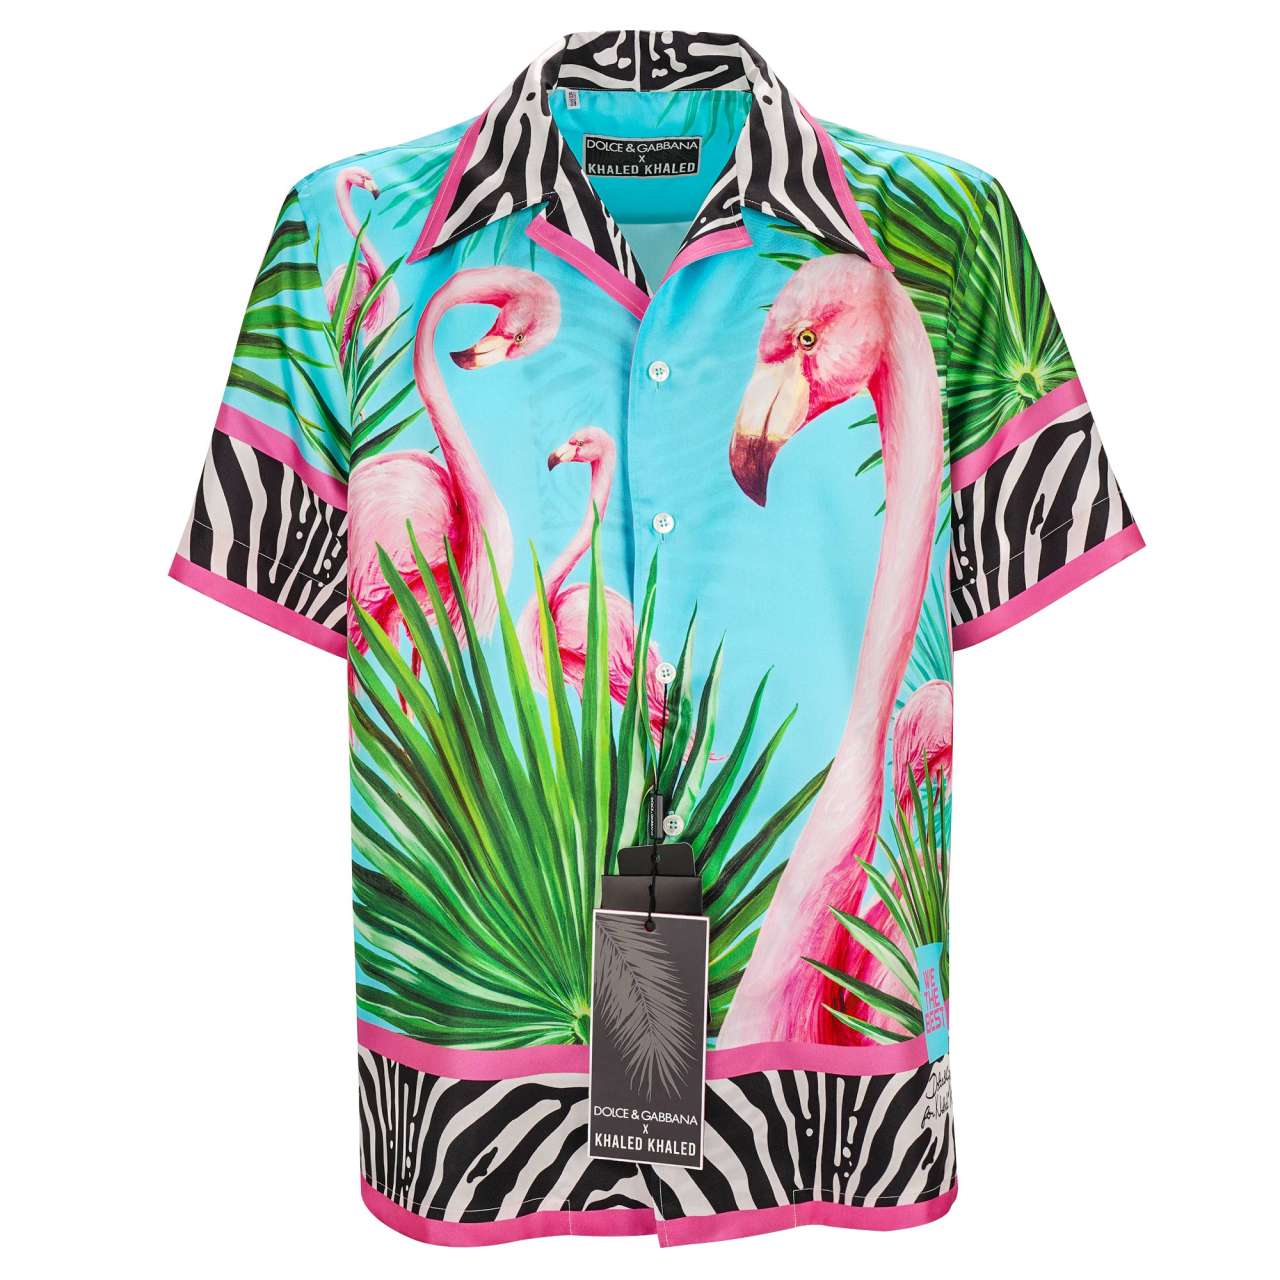 Dolce & Gabbana - DJ Khaled Silk Flamingo Zebra Shirt with Sunglasses and CD 37 For Sale